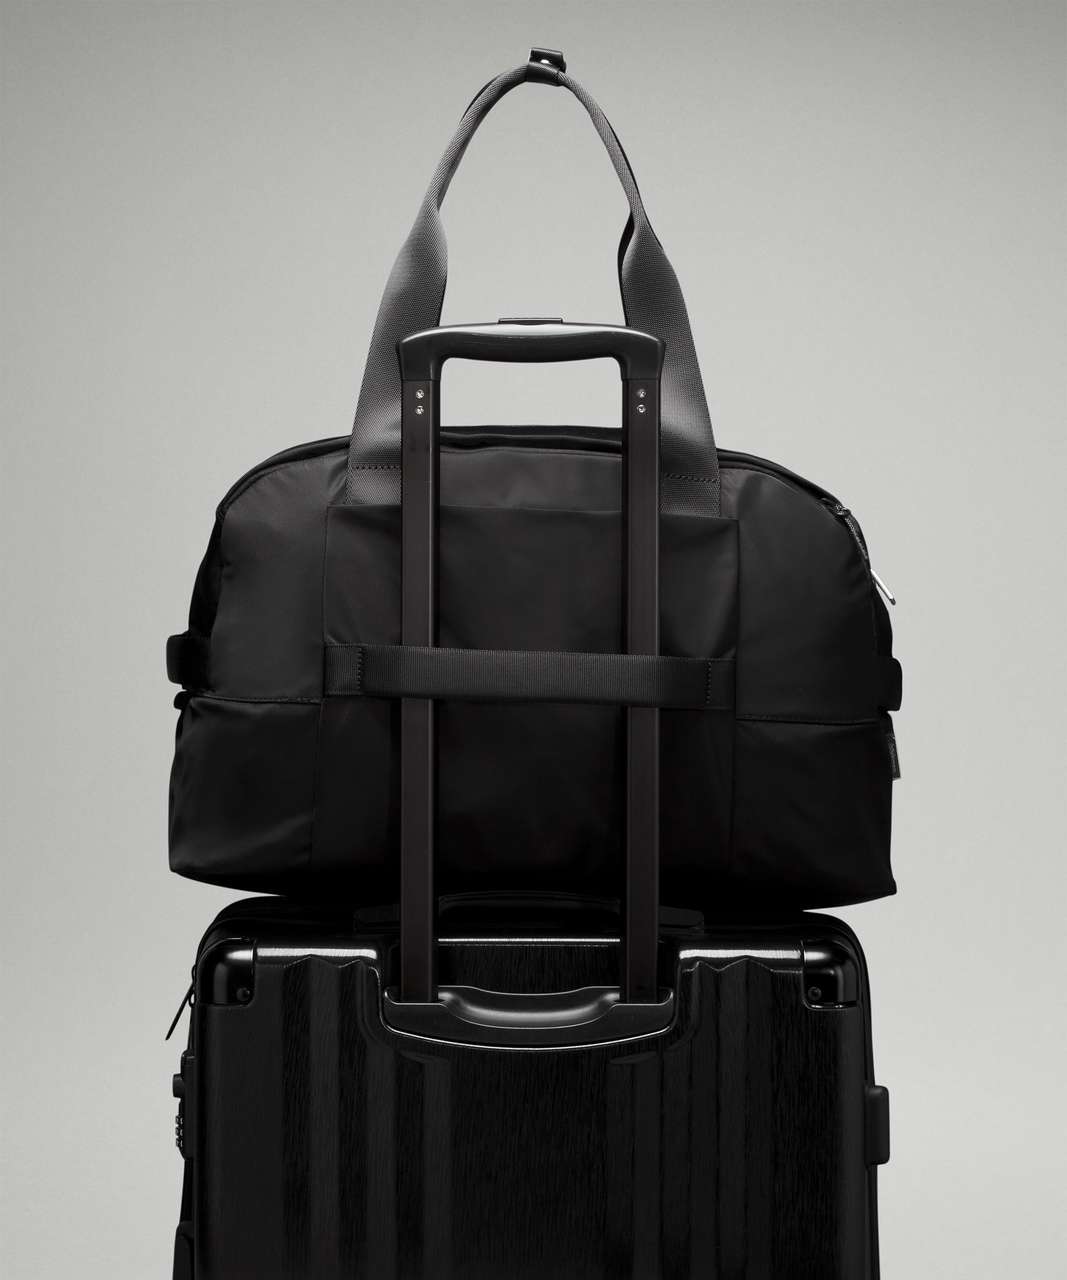 Lululemon City Adventurer Duffle Bag 29L - Black